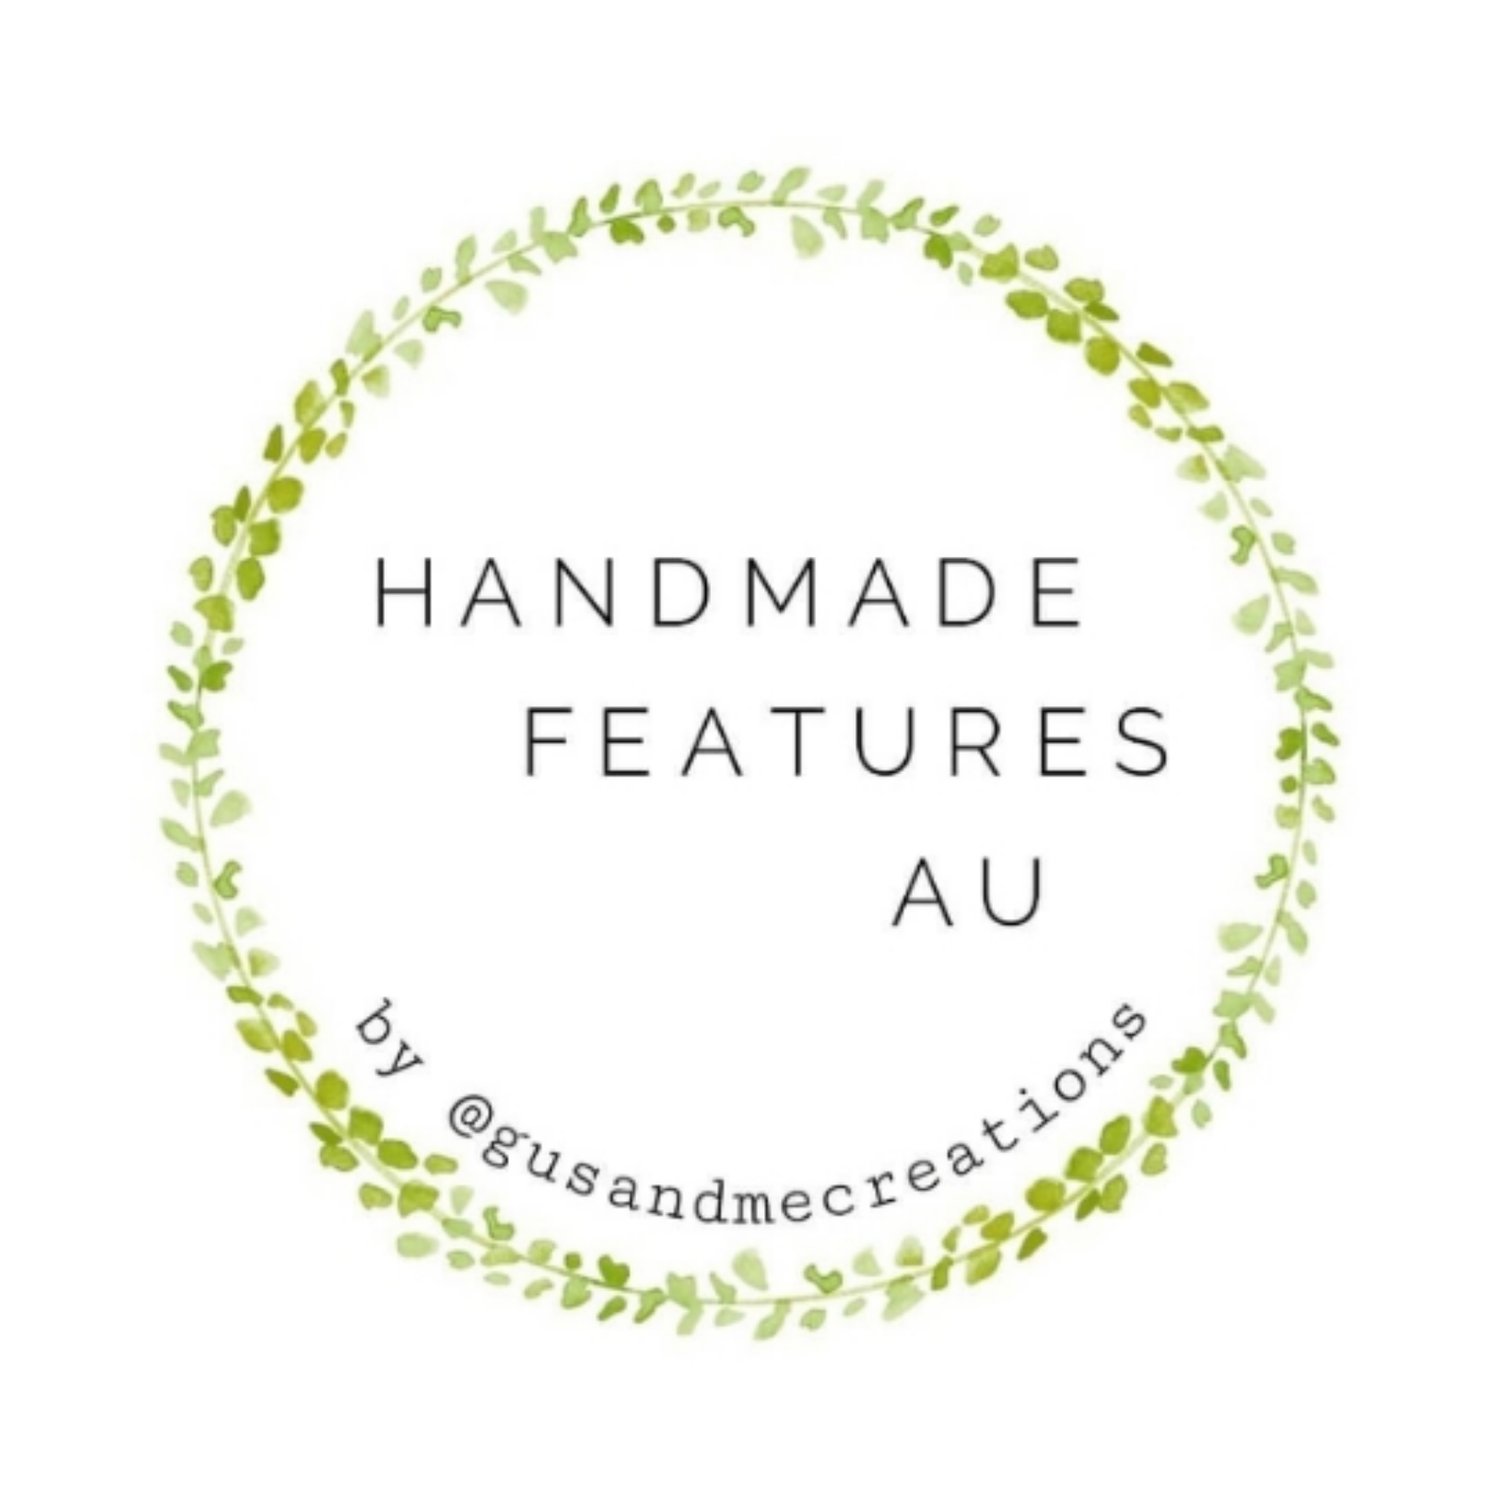 Handmade Features Au